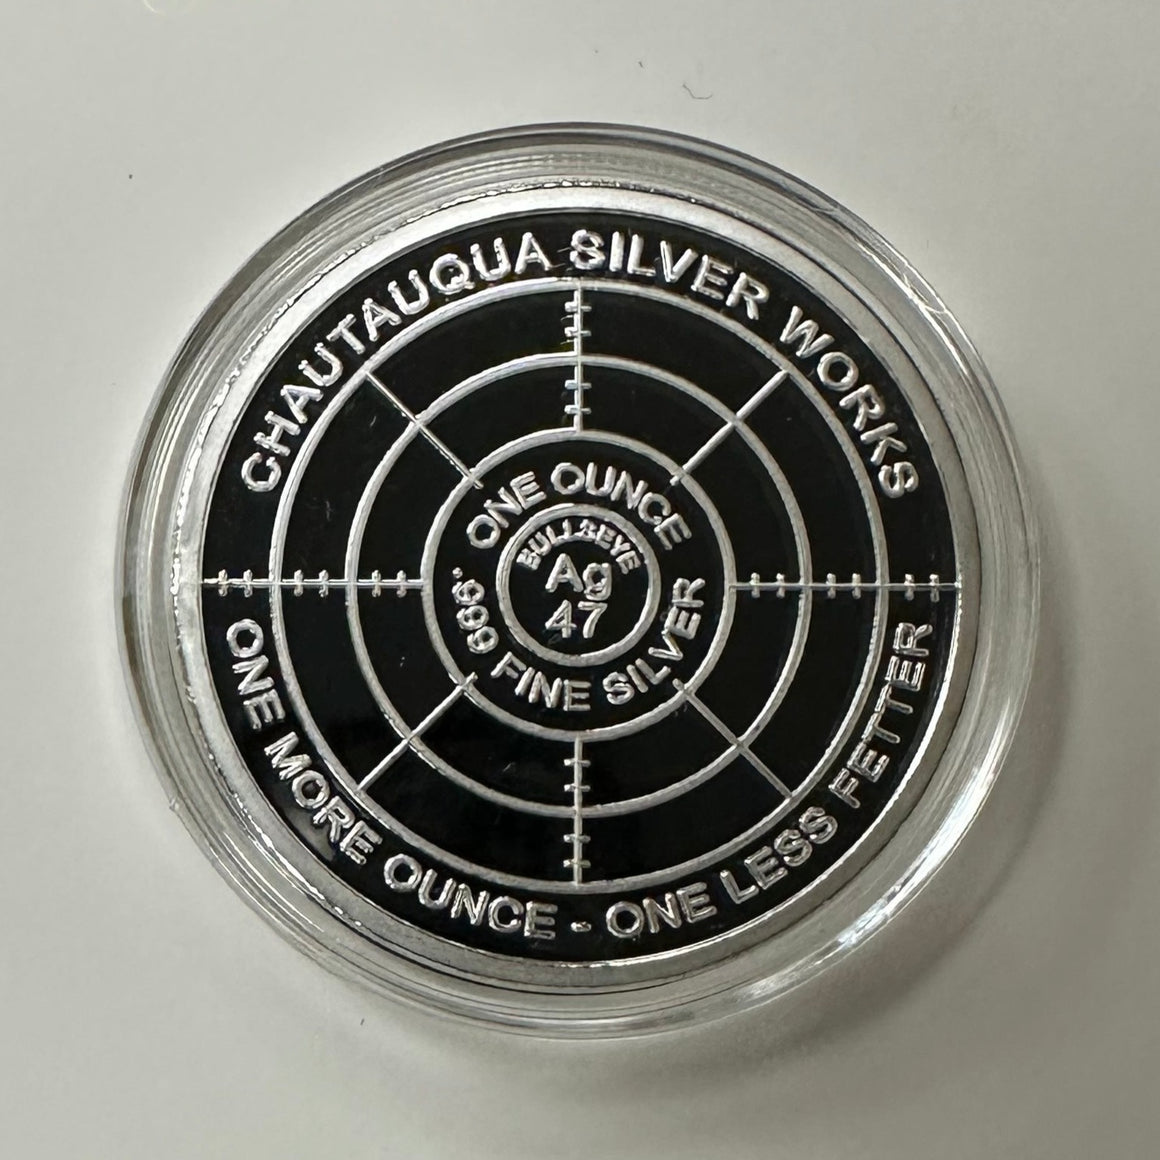 Materialistic - Istic Series by Chautauqua Silver Works, 1oz .999 Fine Silver Round